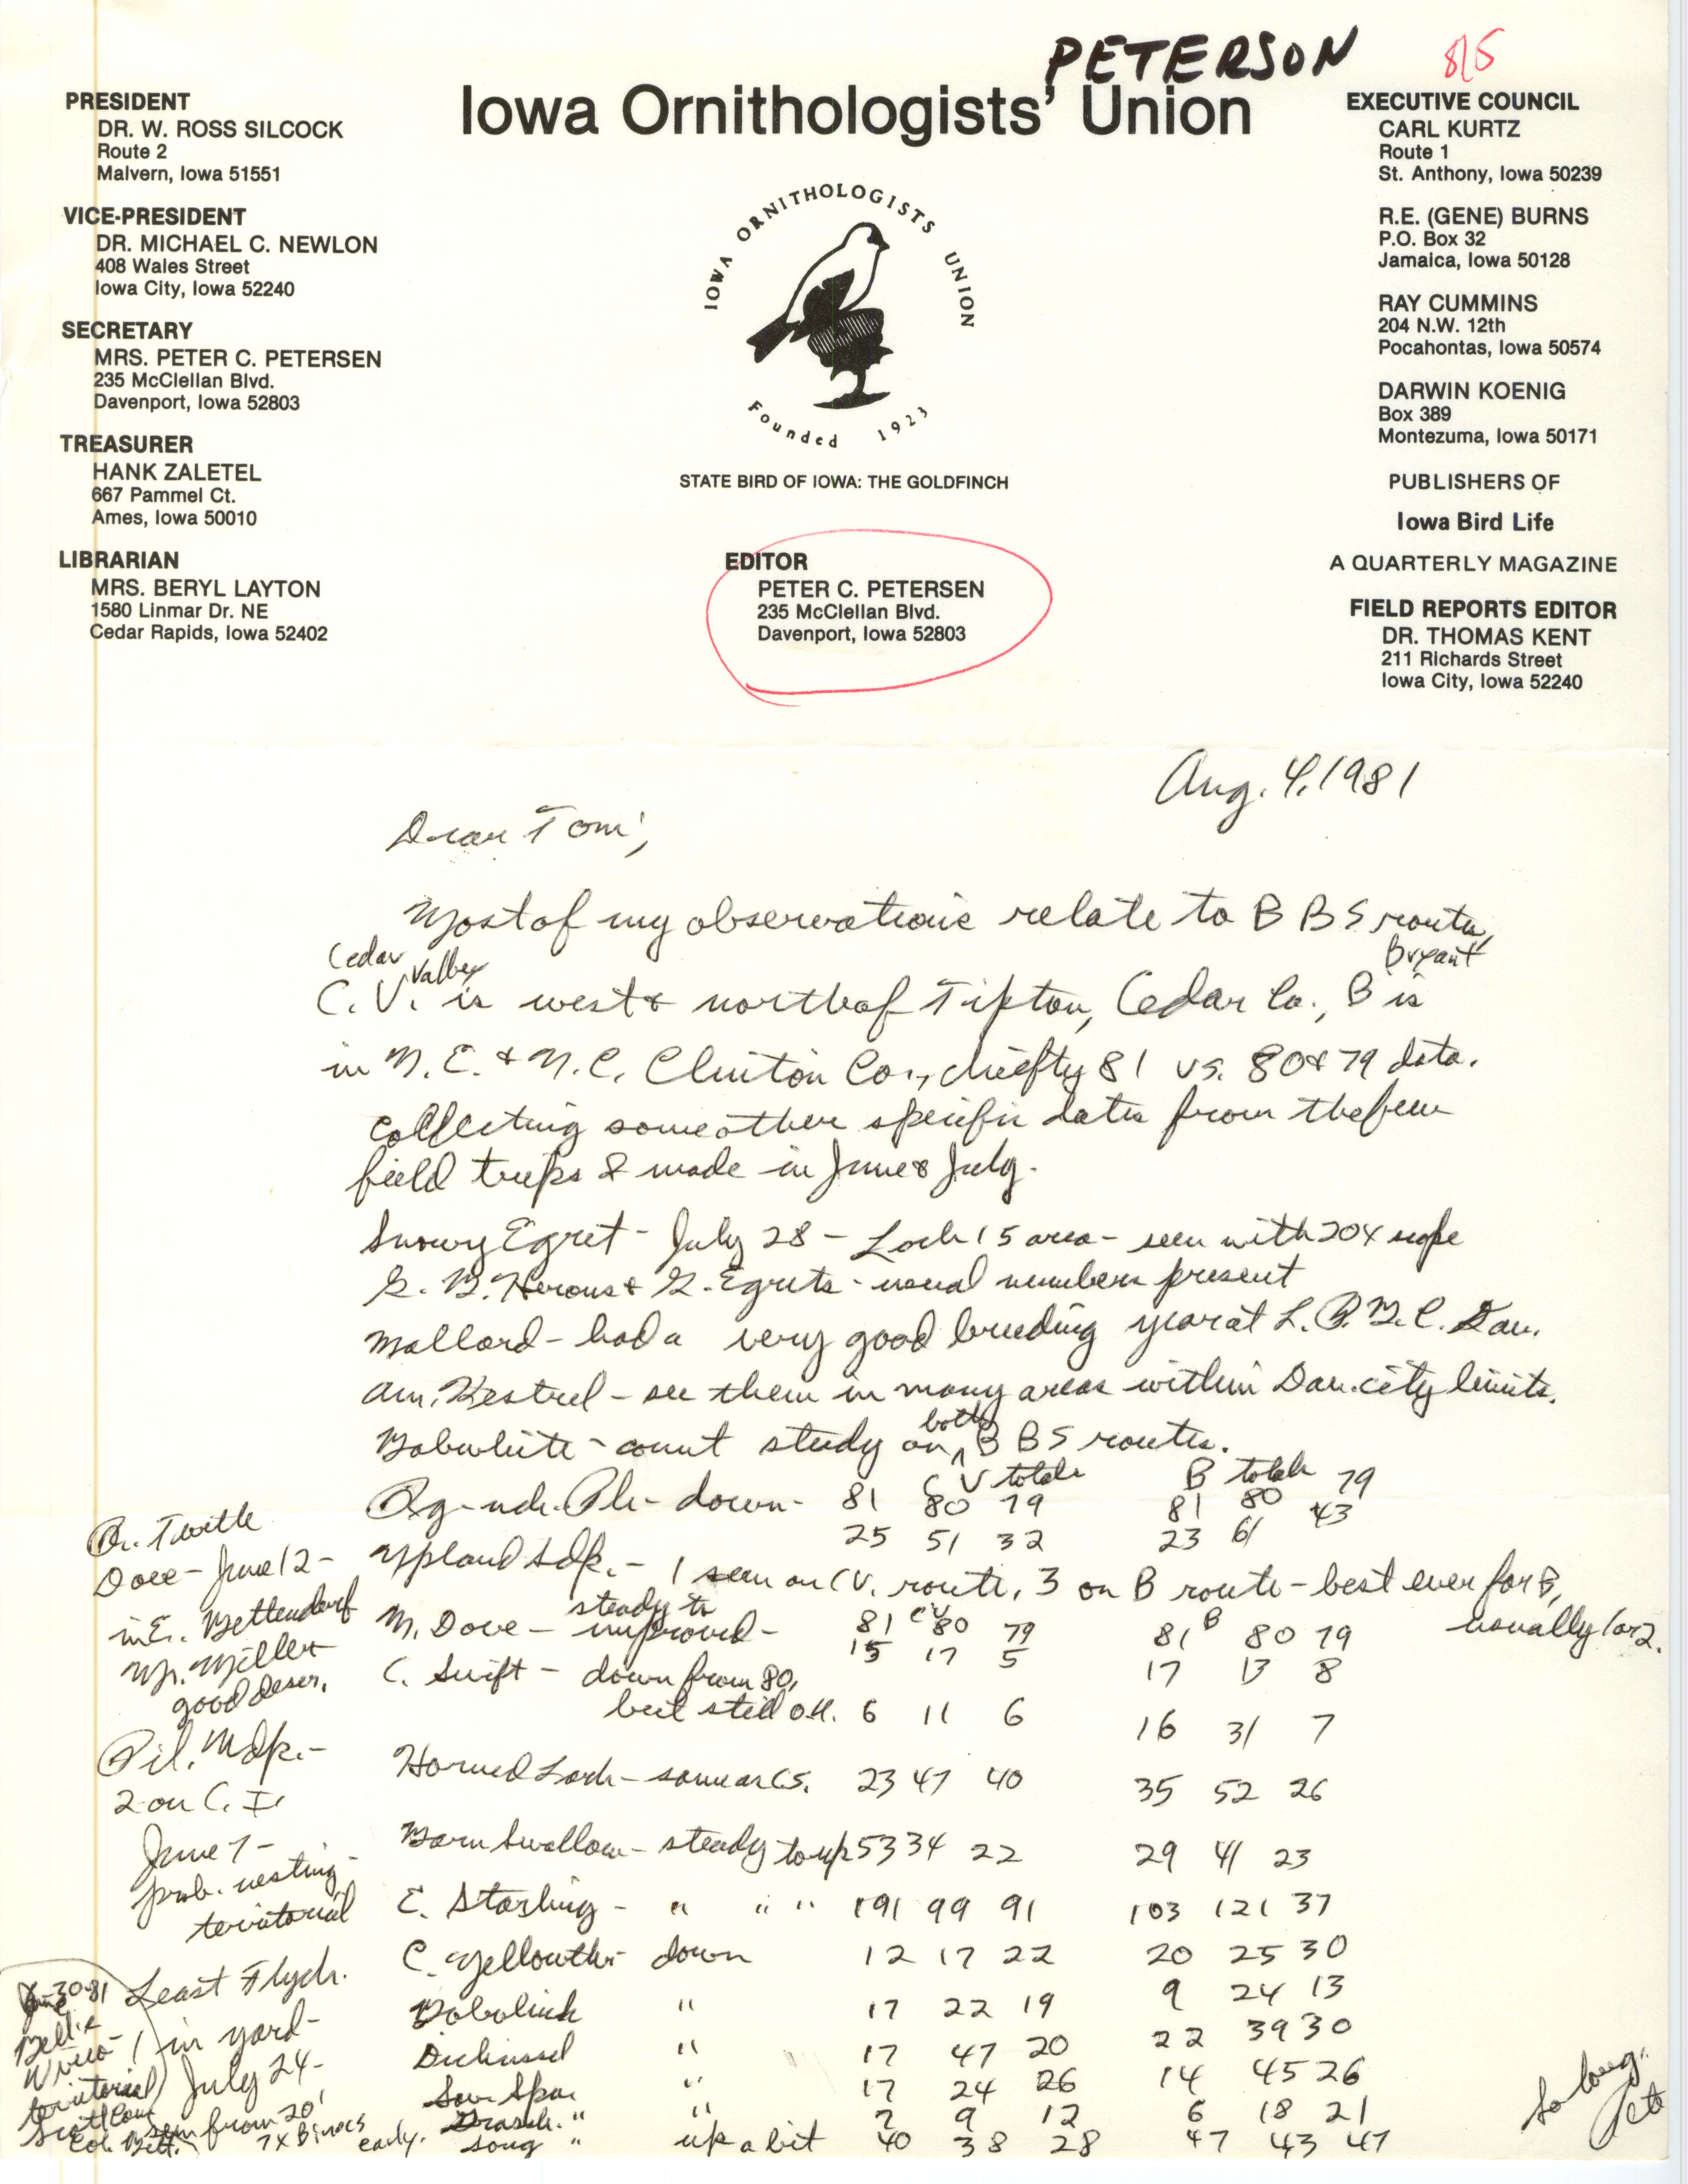 Peter C. Petersen letter to Thomas H. Kent regarding summer bird sightings, August 4, 1981